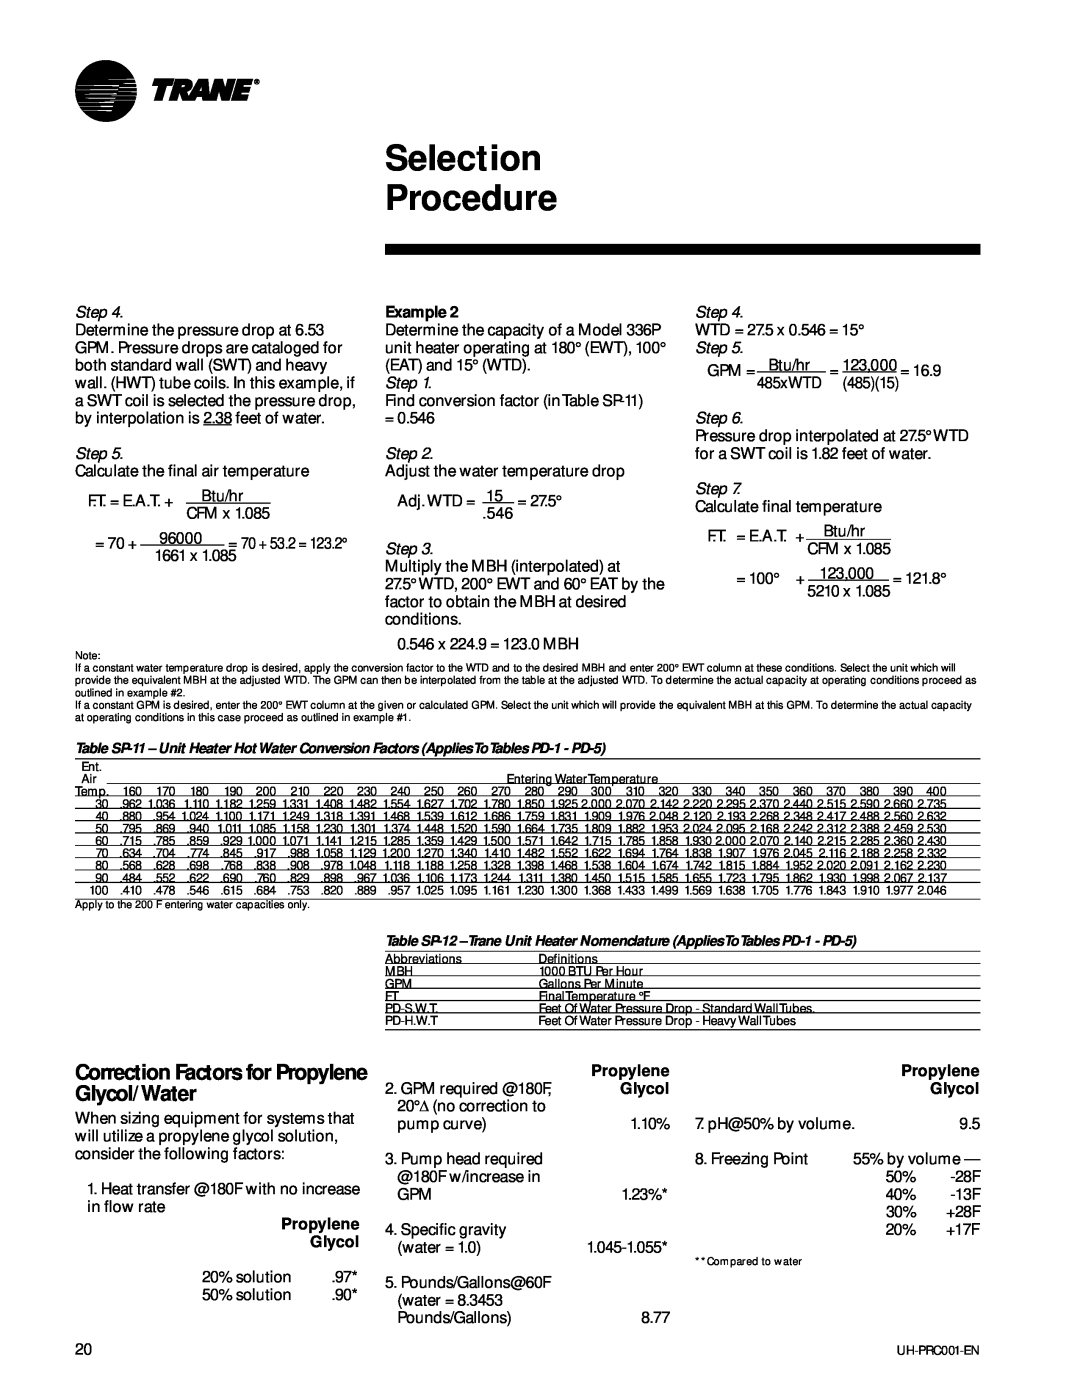 Trane UH-PRC001-EN manual Correction Factors for Propylene Glycol/Water, Selection Procedure, Step 